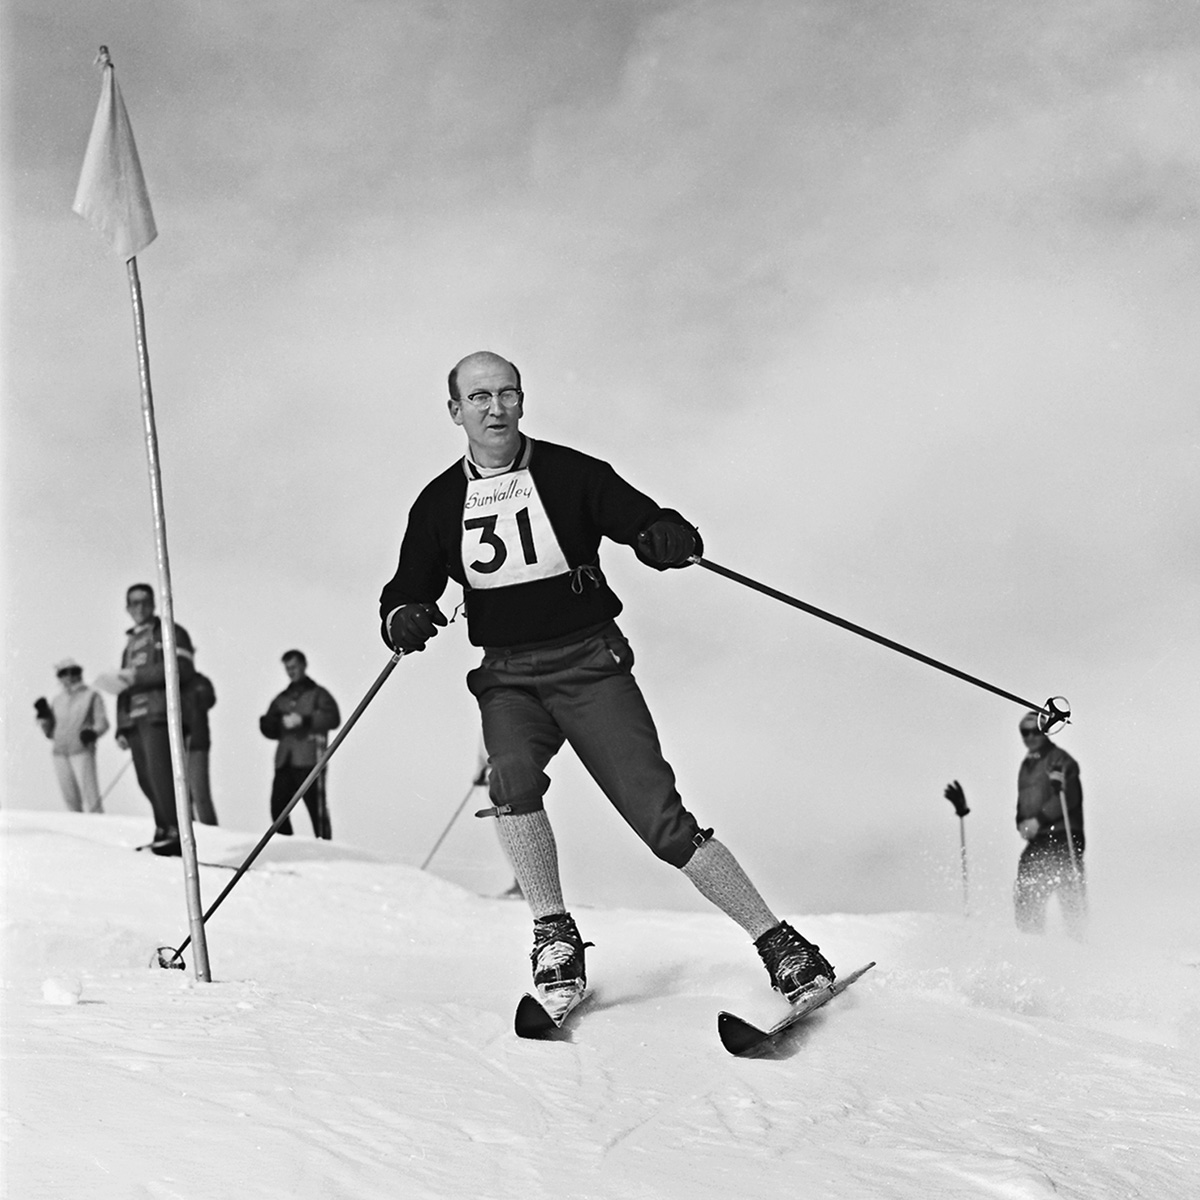 Scott Sports : le fondateur Ed Scott en ski